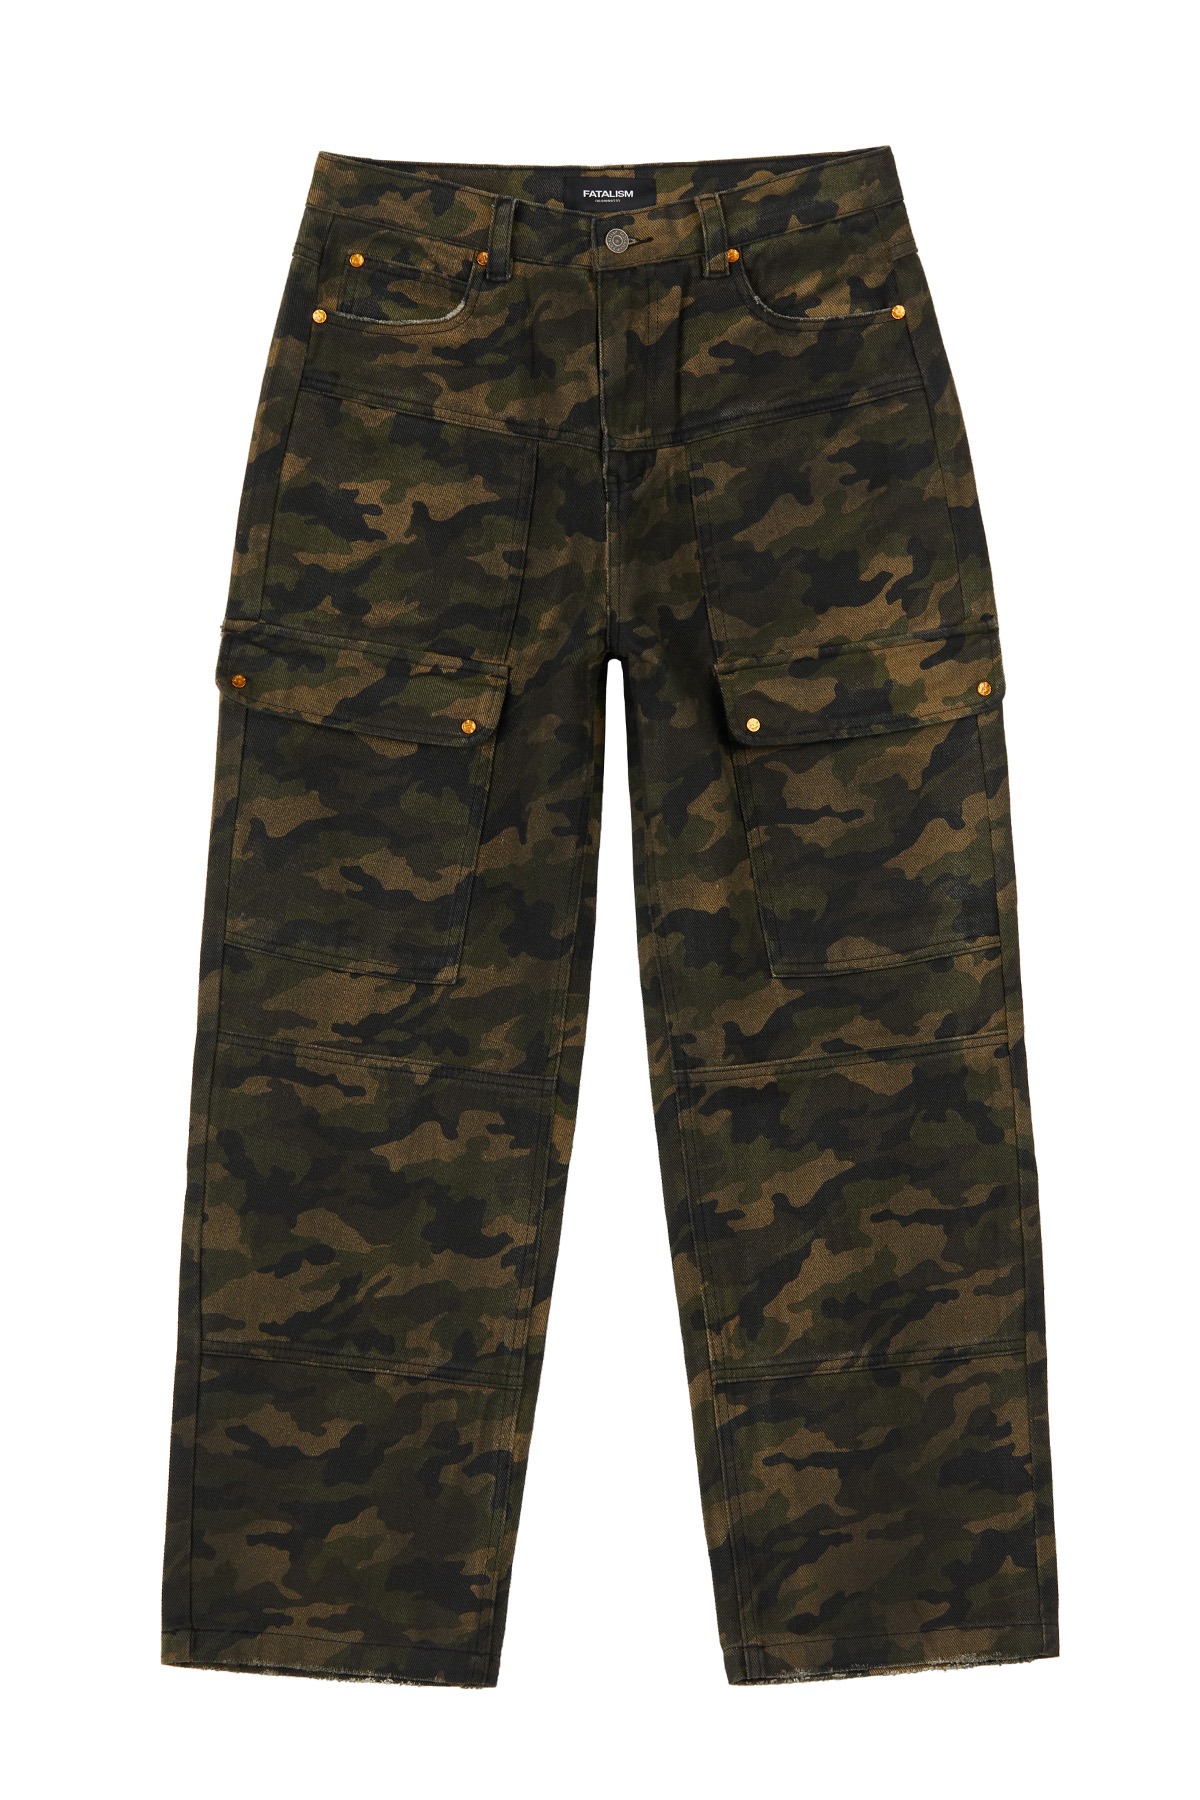 #0347 Military panel pants camouflage